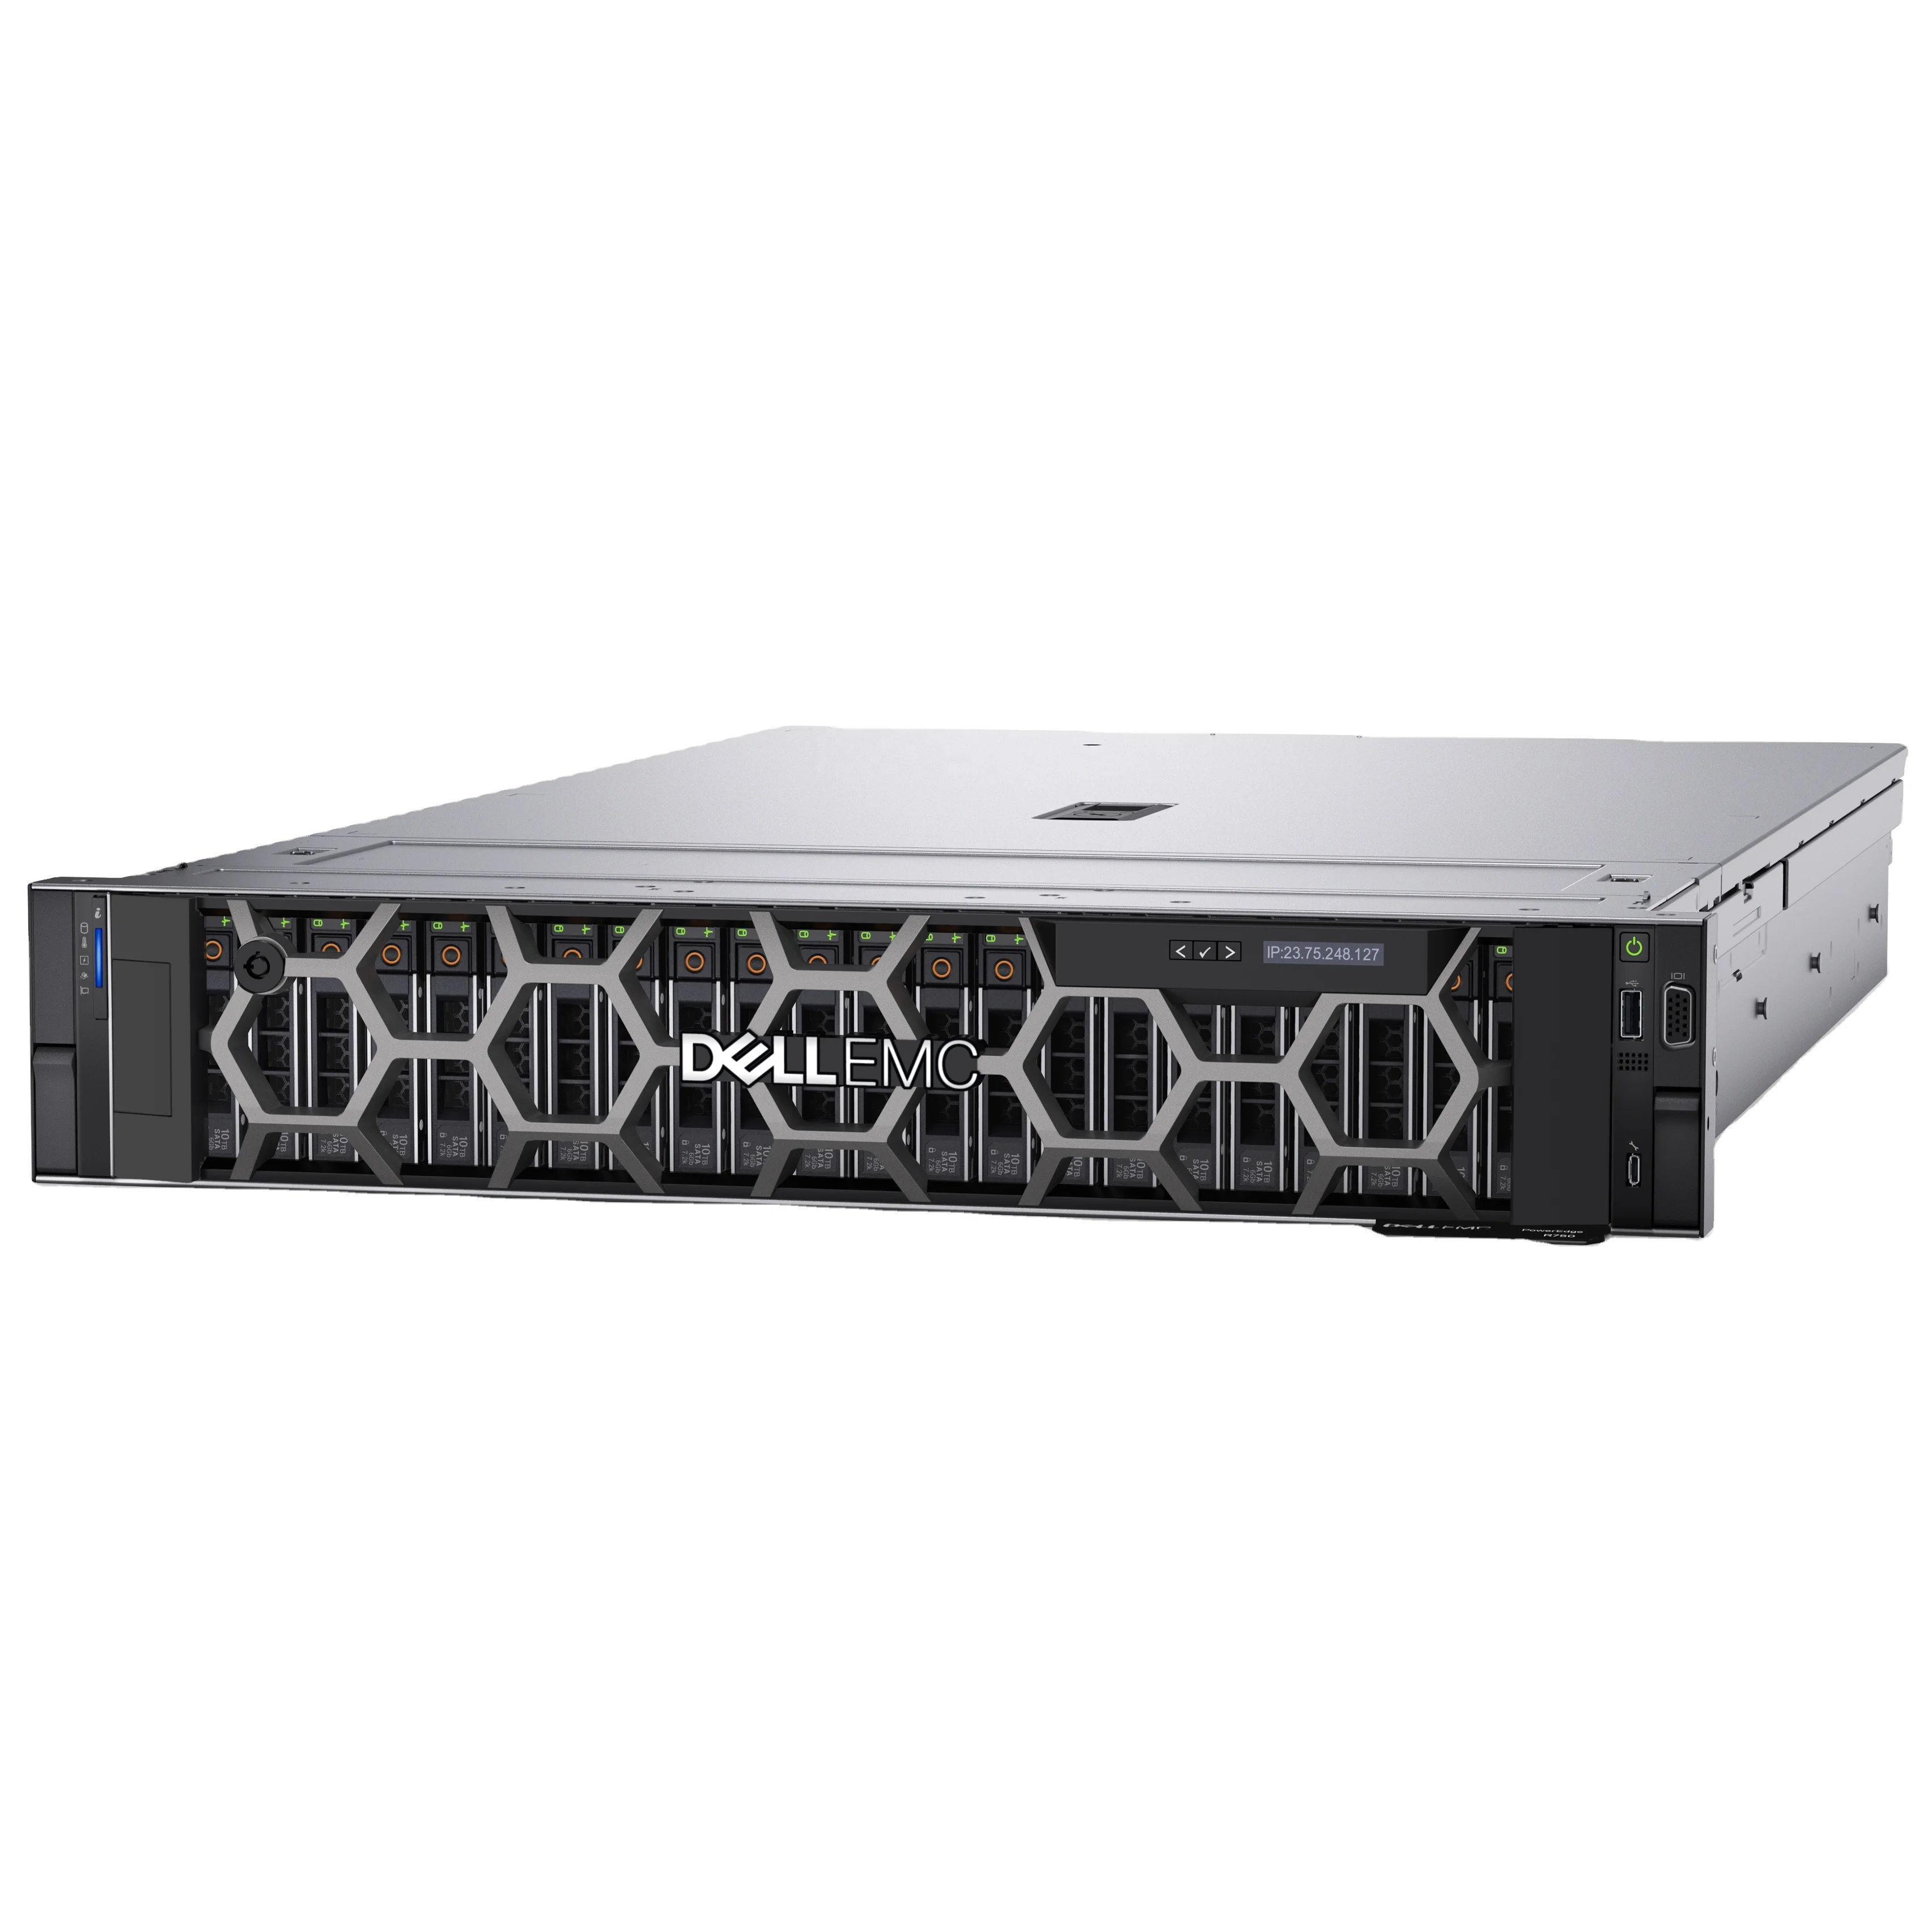 DELL Poweredge R640 650 R740 R750 R940 New Used Hosts Servidor Network Storage System 2u Rack Server